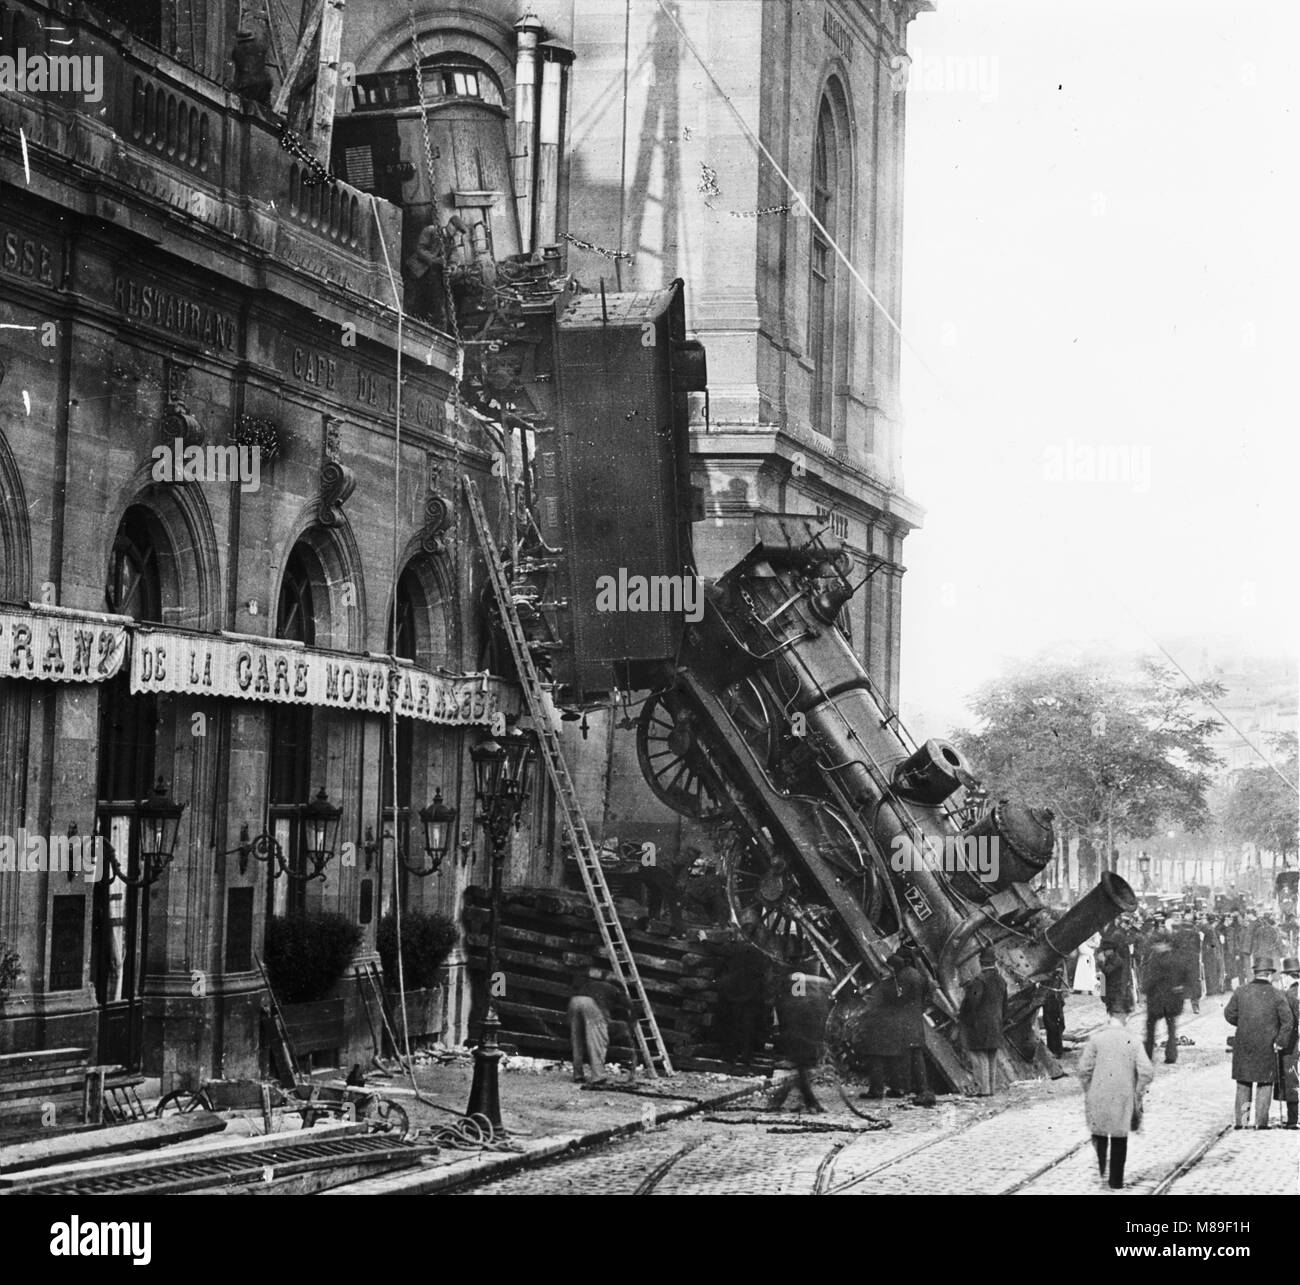 Steam Trains Crashes Through Facade of Gare Montparnasse, Paris, France, 1895 Stock Photo